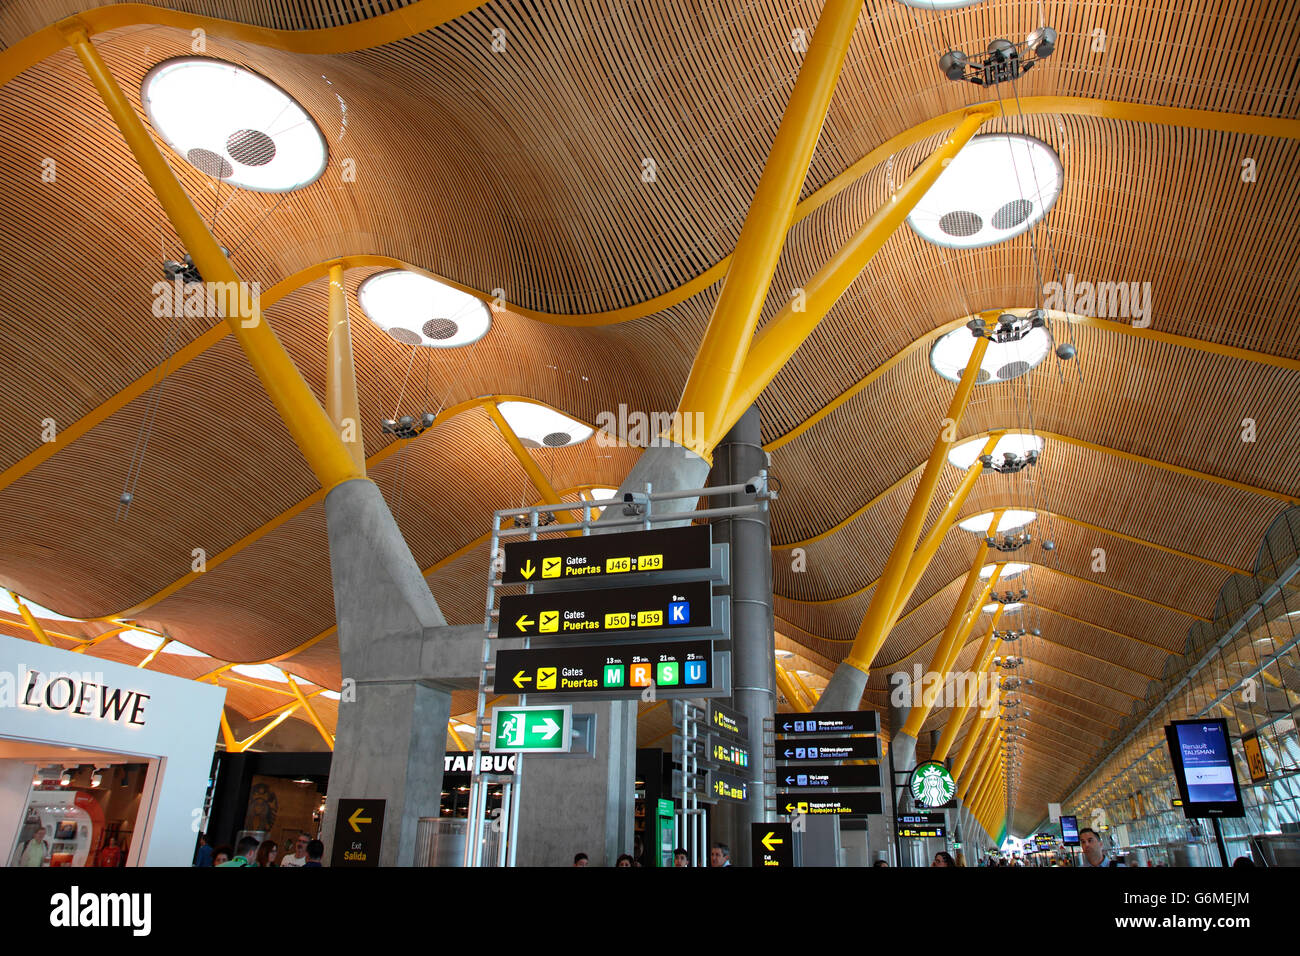 Barajas Airport Madrid by Richard Rogers and Antonio Lamela Stock Photo